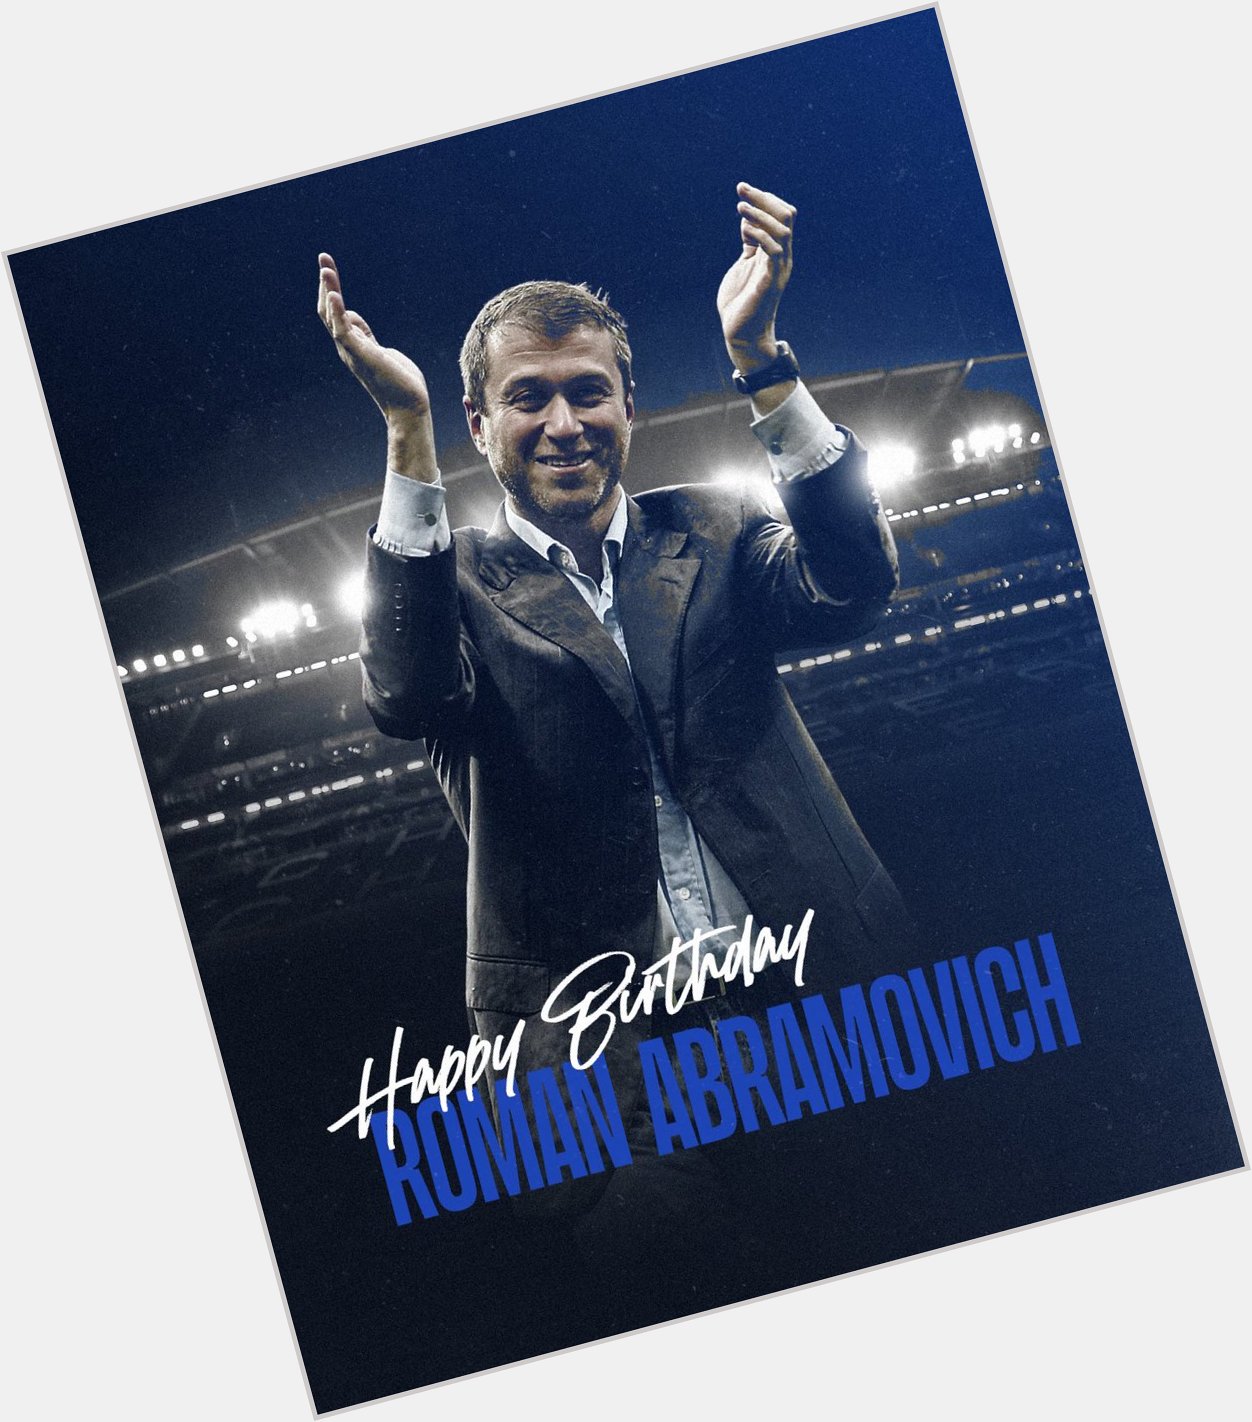 Happy birthday, Roman Abramovich! 